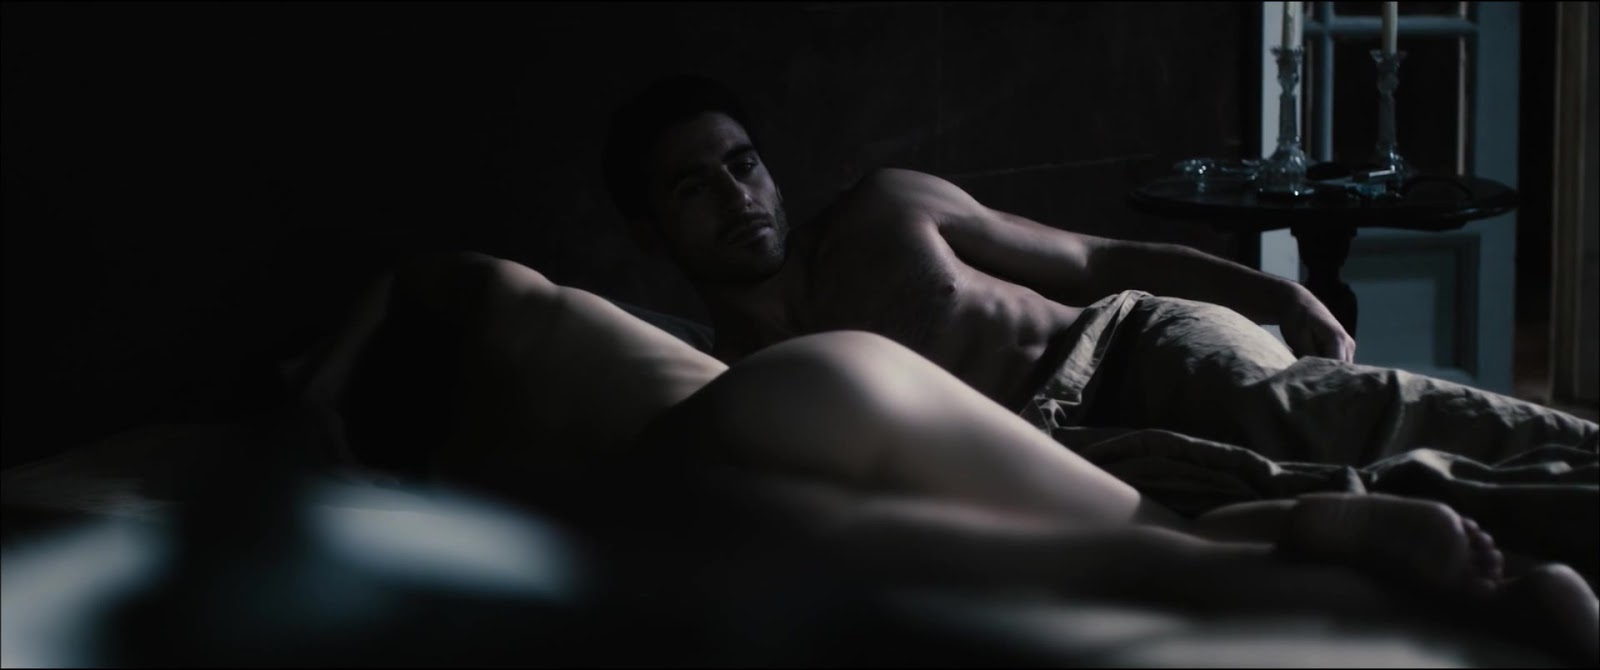 Miguel Ángel Silvestre nude in Dark Impulse.